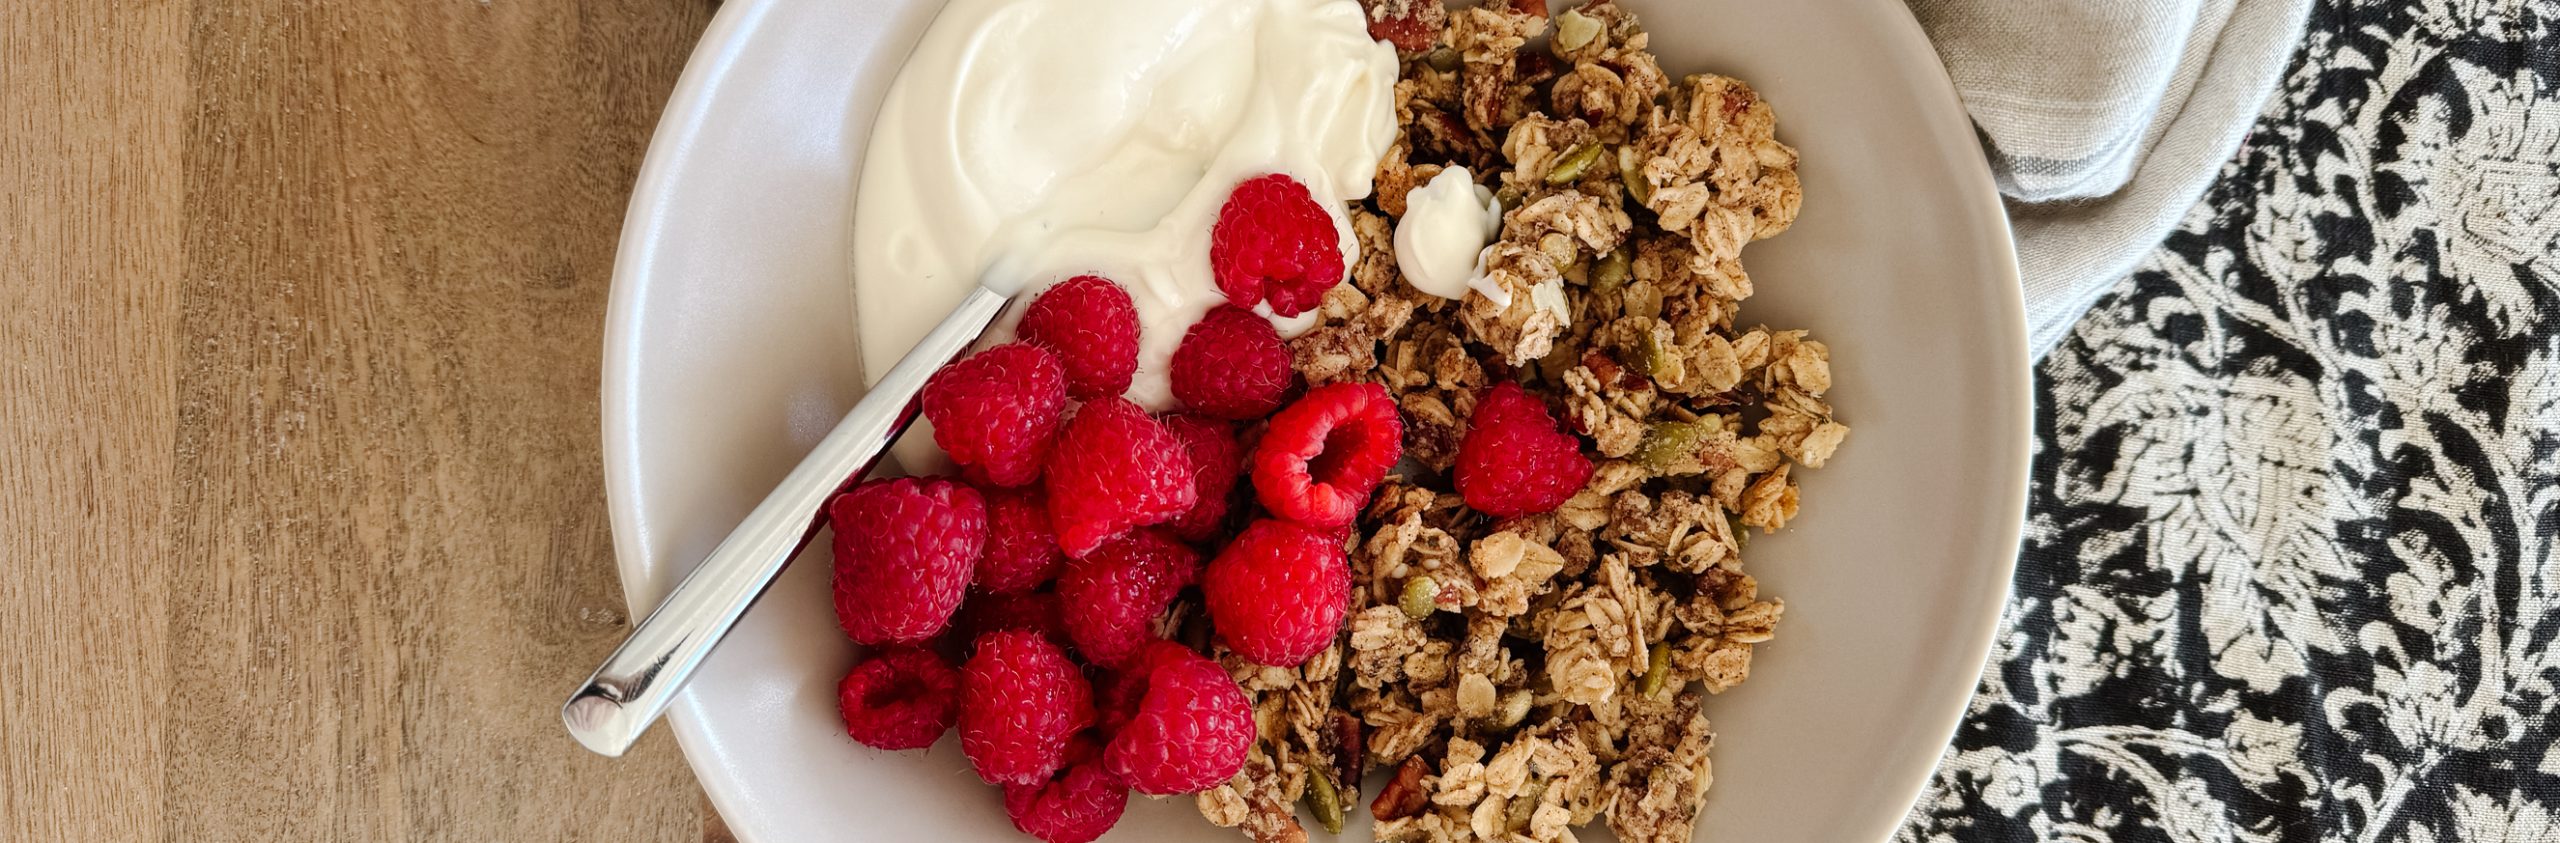 gluten-free granola in a bowl with raspberries and yogurt